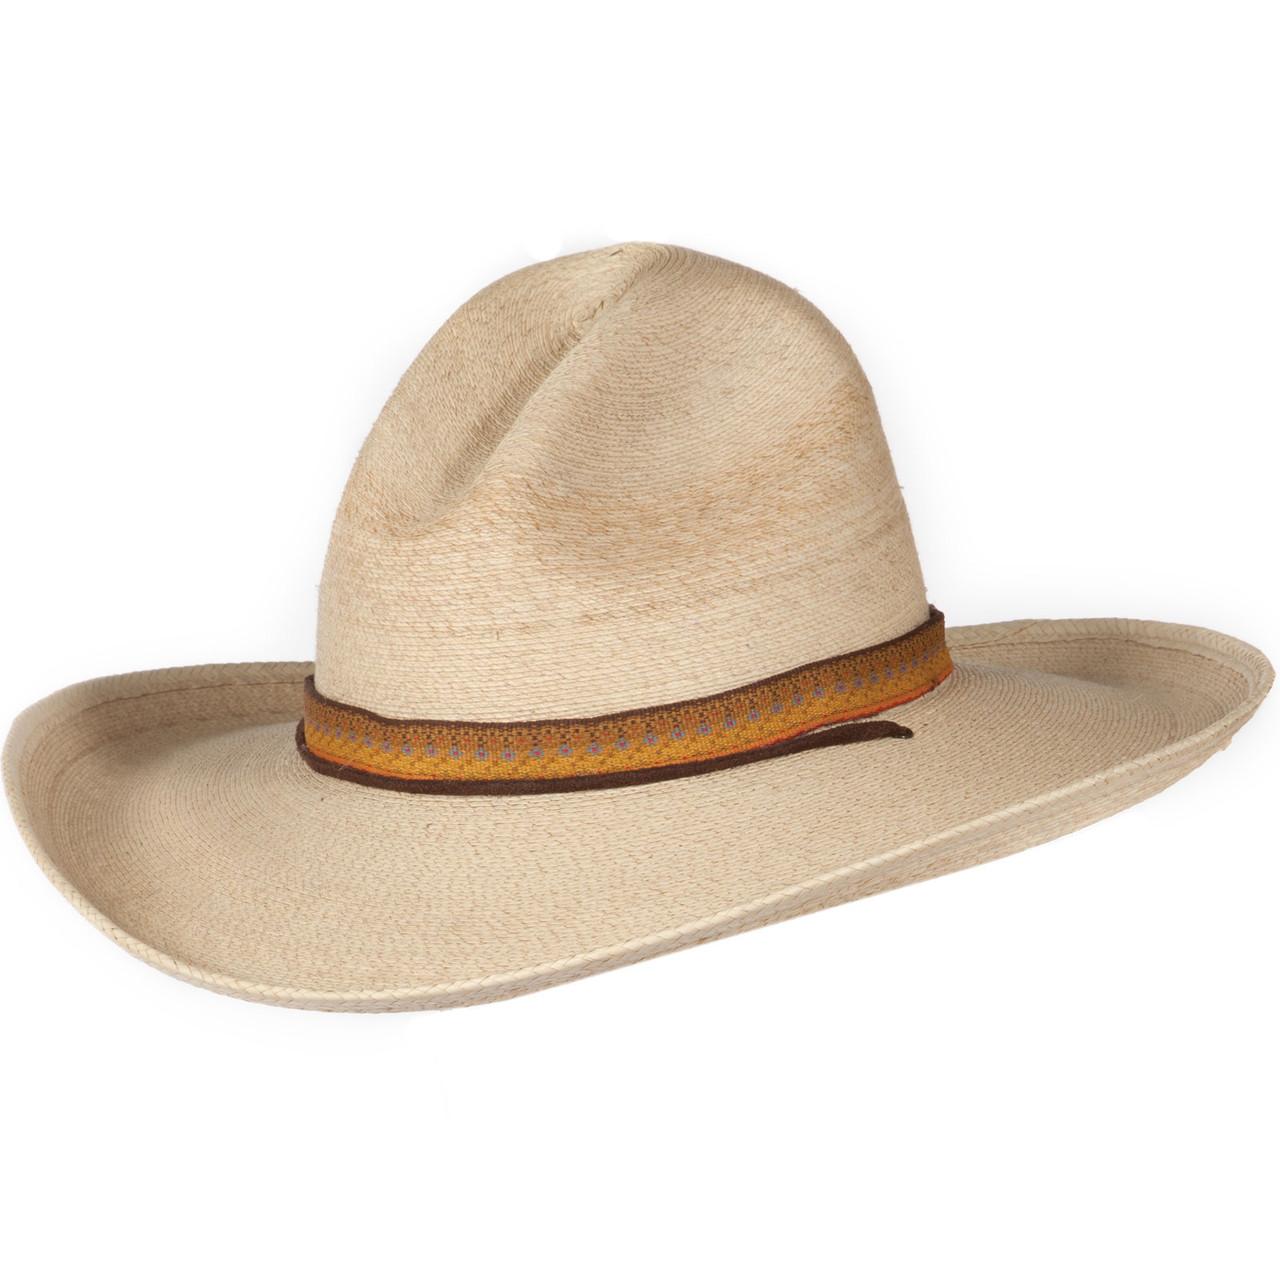 Fishpond Eddy River hat - AvidMax